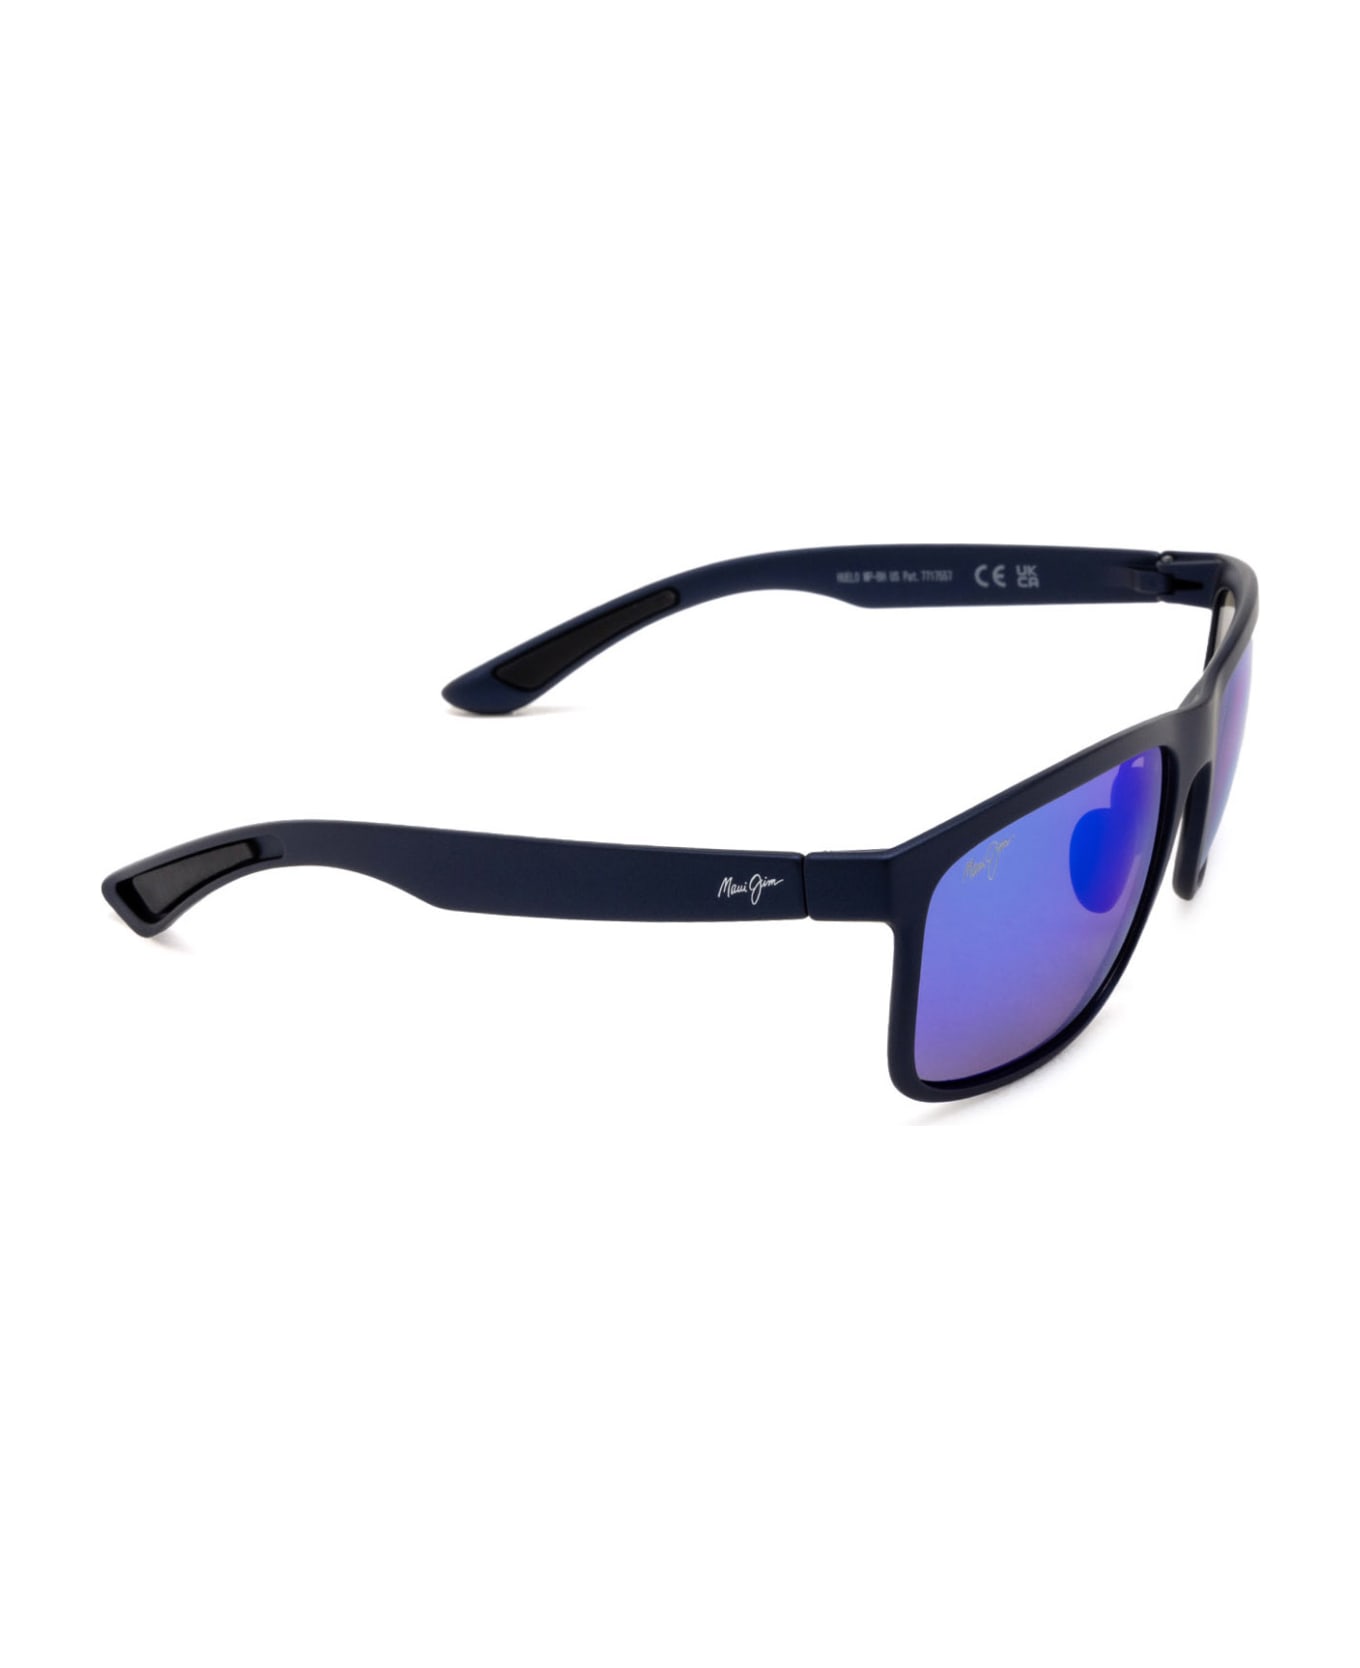 Maui Jim Mj449 Blue Sunglasses - Blue サングラス